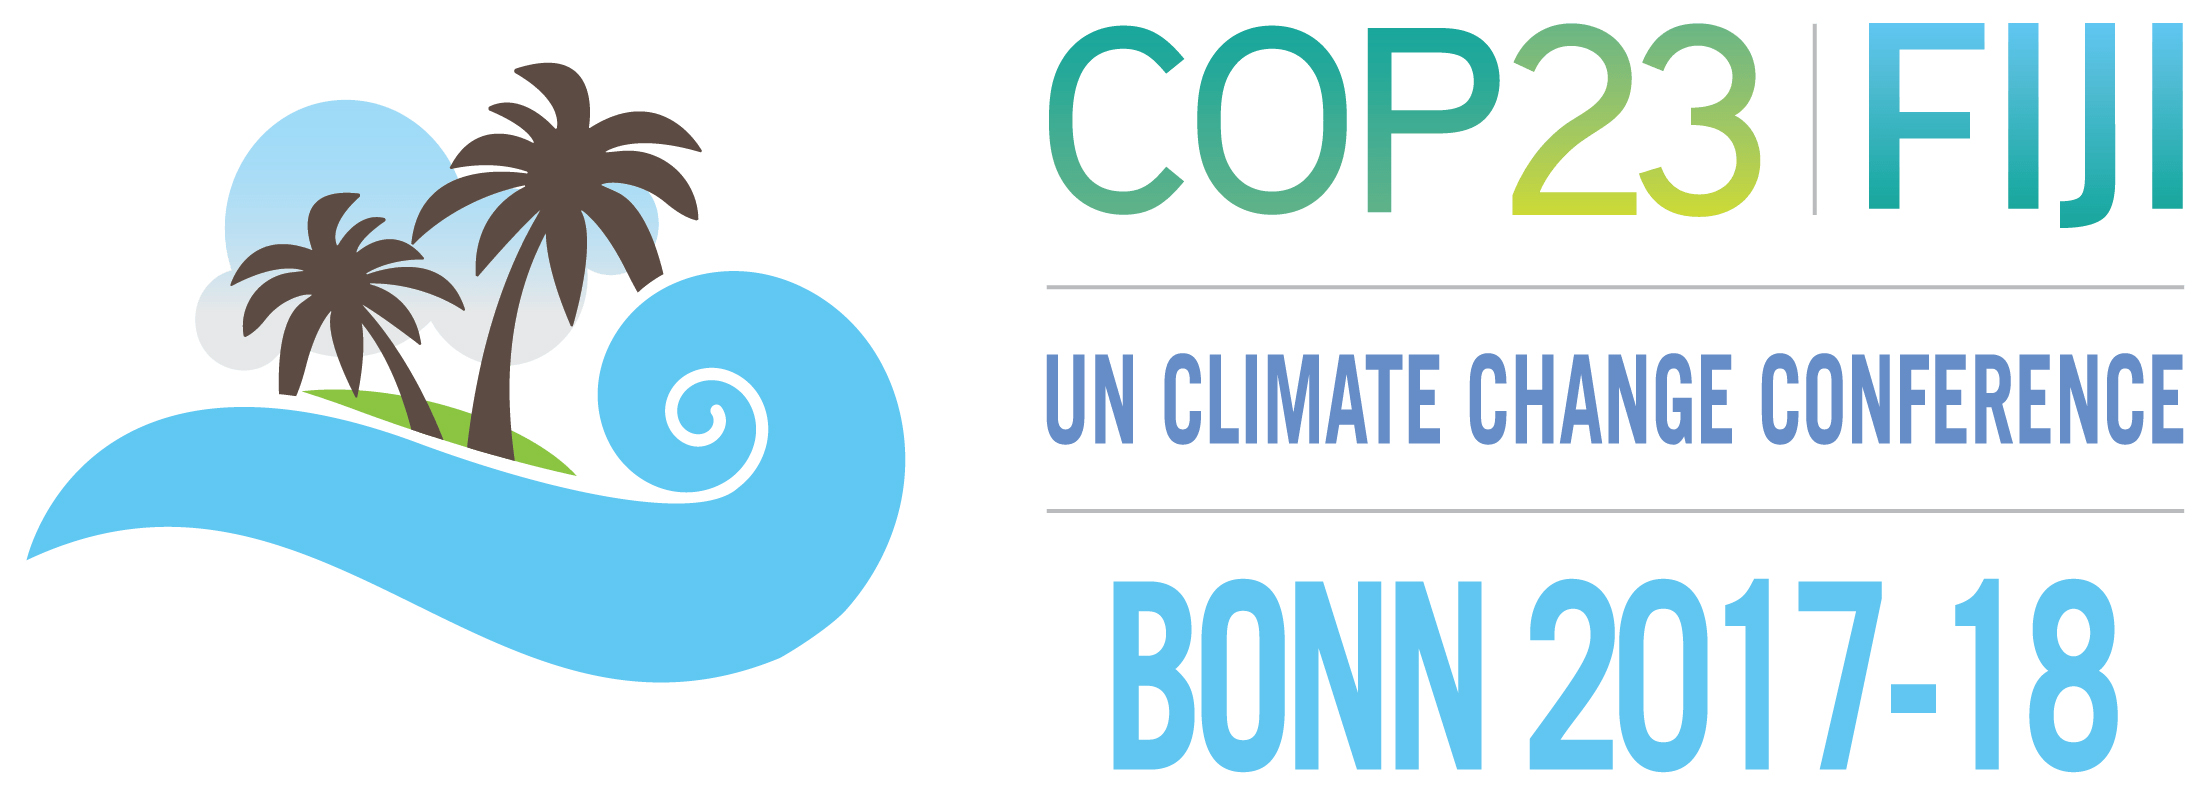 Logo UN Climate Change Conference Bonn 2017-18